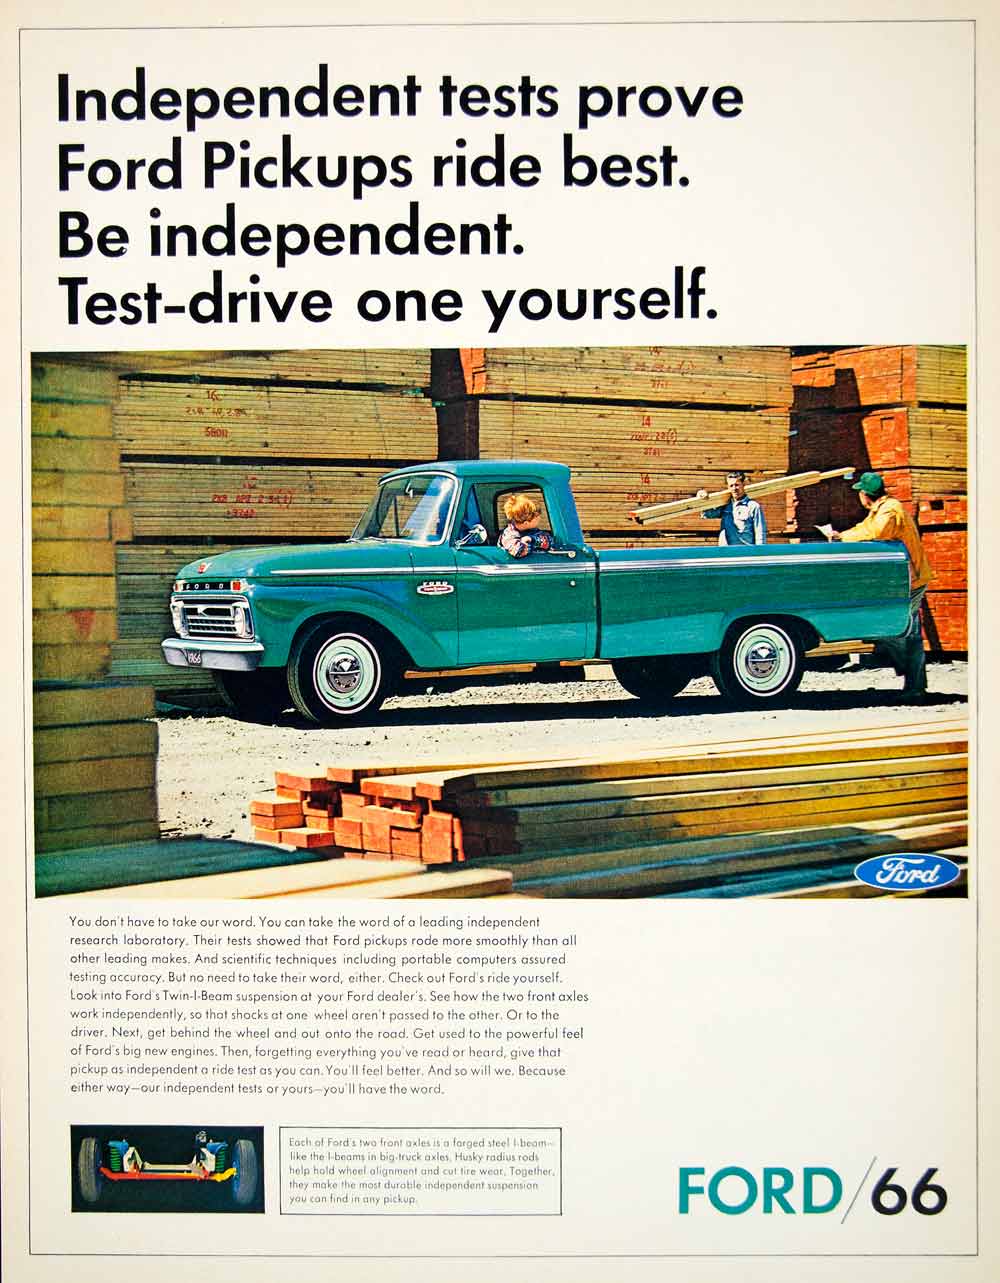 1966 Ad Vintage Ford Pickup Truck Blue Hauling Vehicle Lumberyard Lumber YLZ1